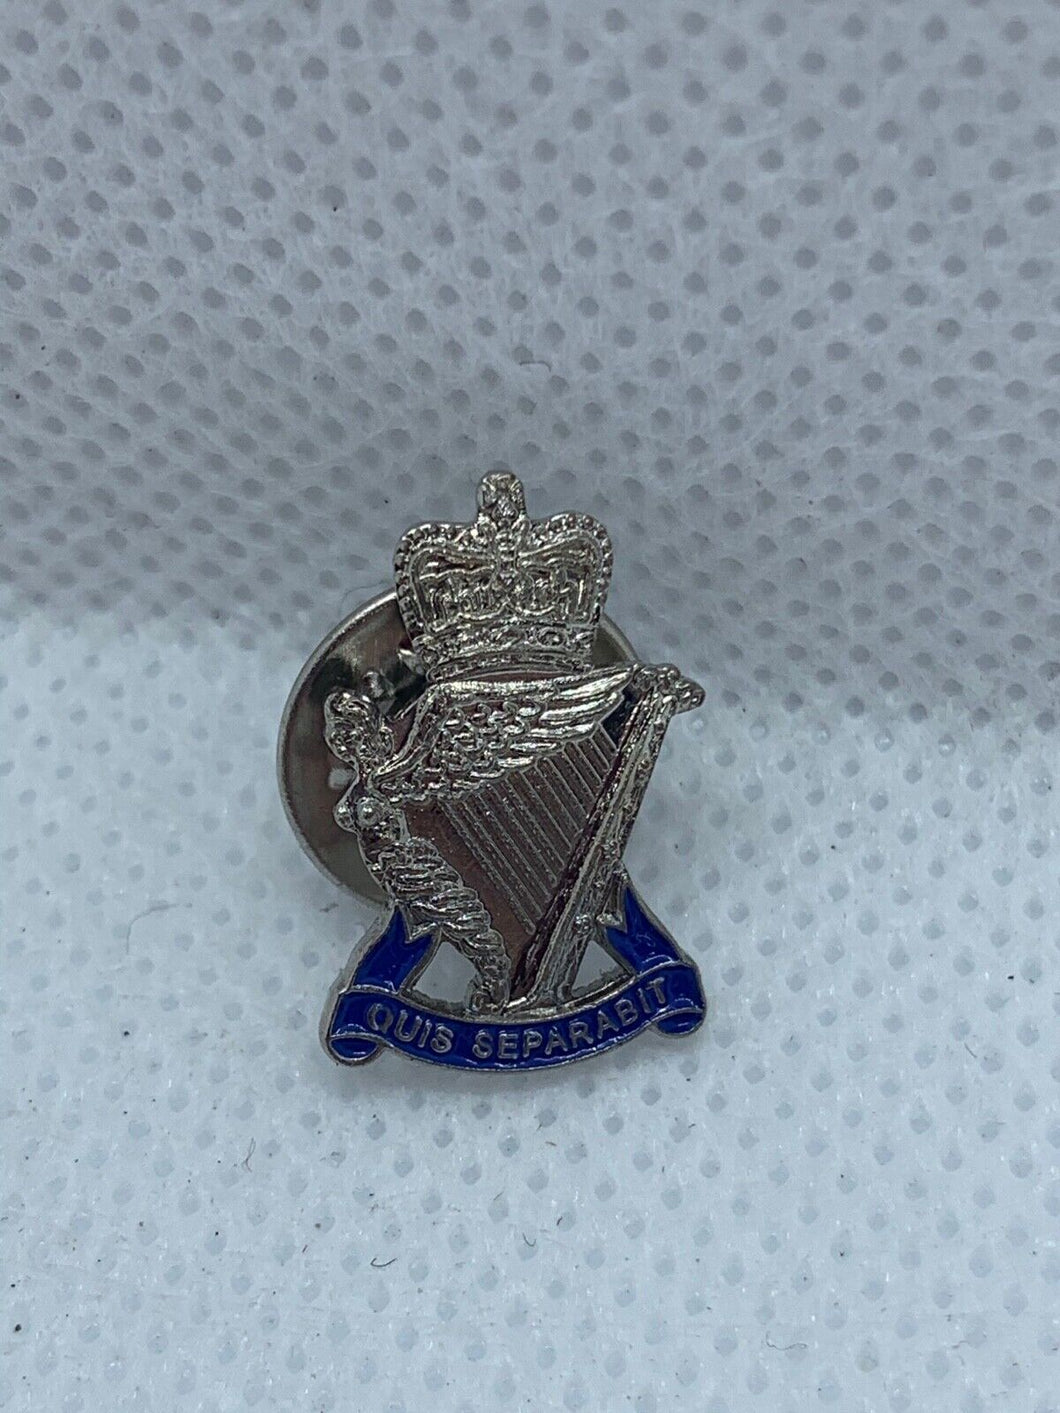 Royal Ulster Rifles - NEW British Army Military Cap / Tie / Lapel Pin Badge #19